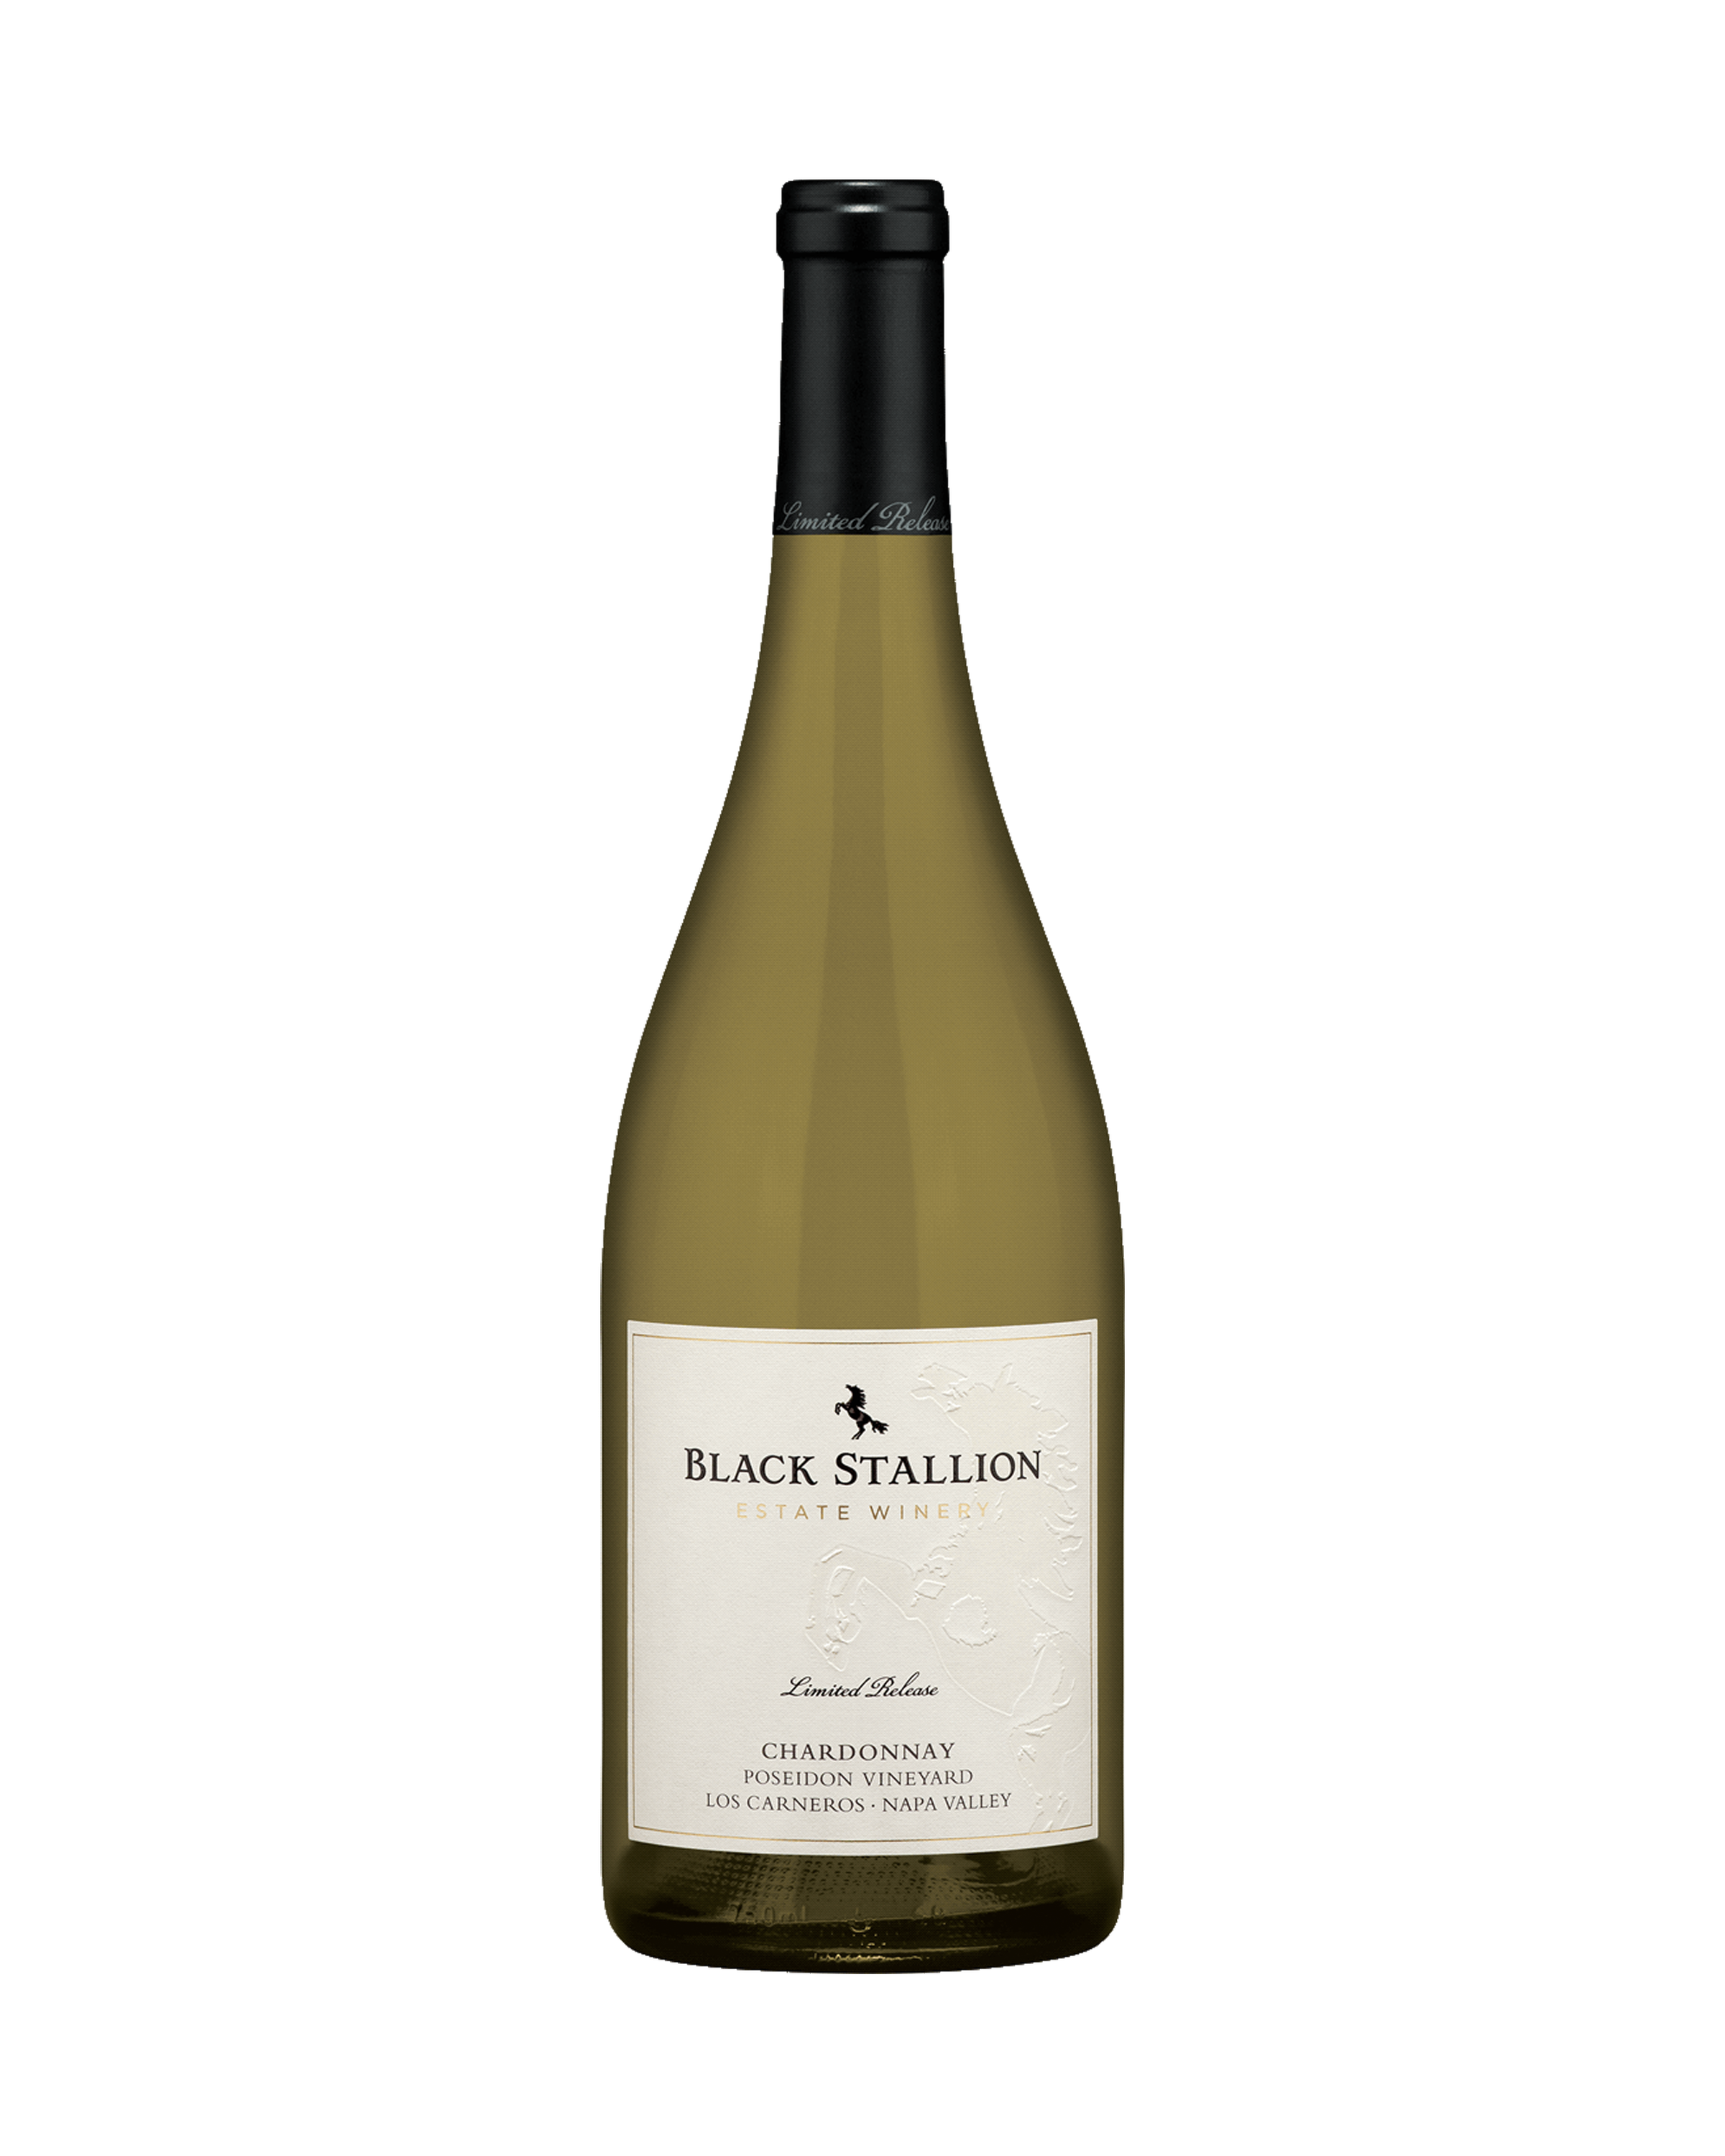 Black Stallion Limited Release Poseidon Vineyard Chardonnay